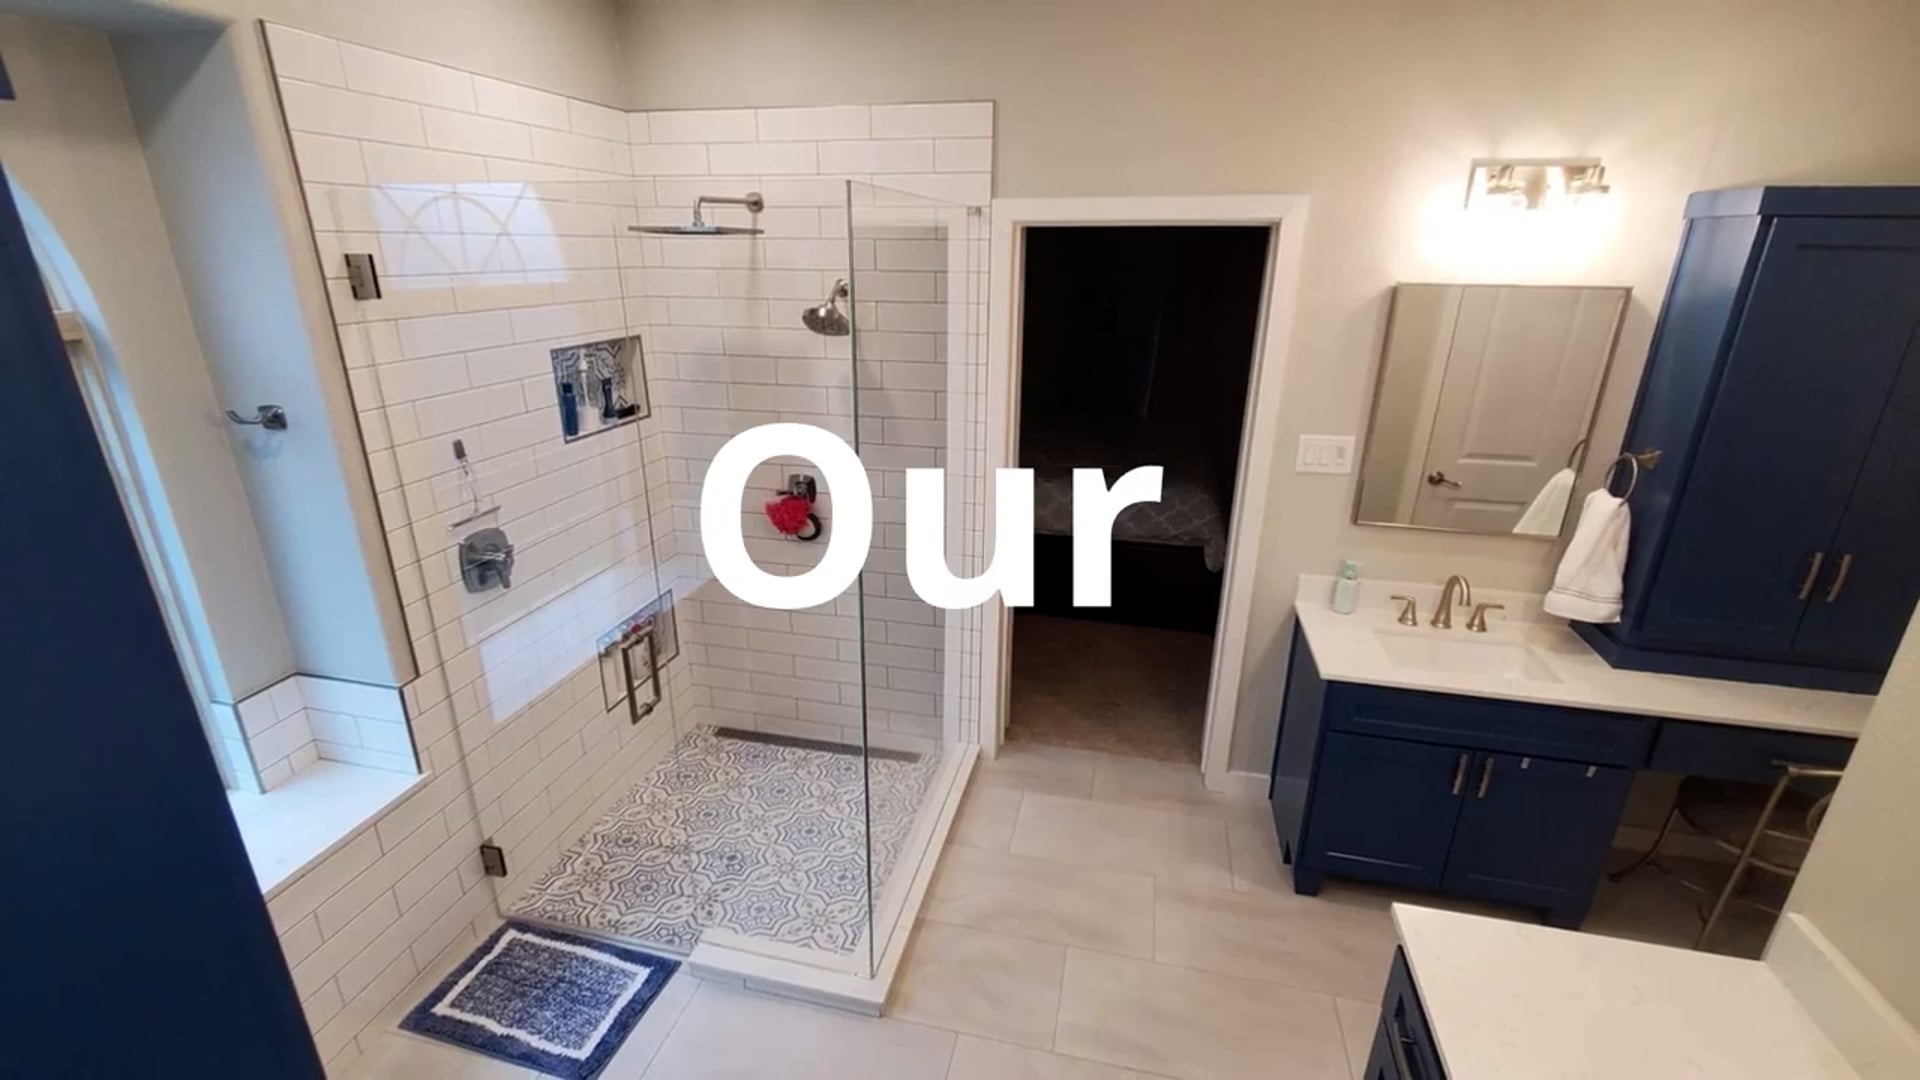 The Luxury Bathroom, Dallas-Fort Worth, TX Interior Designer